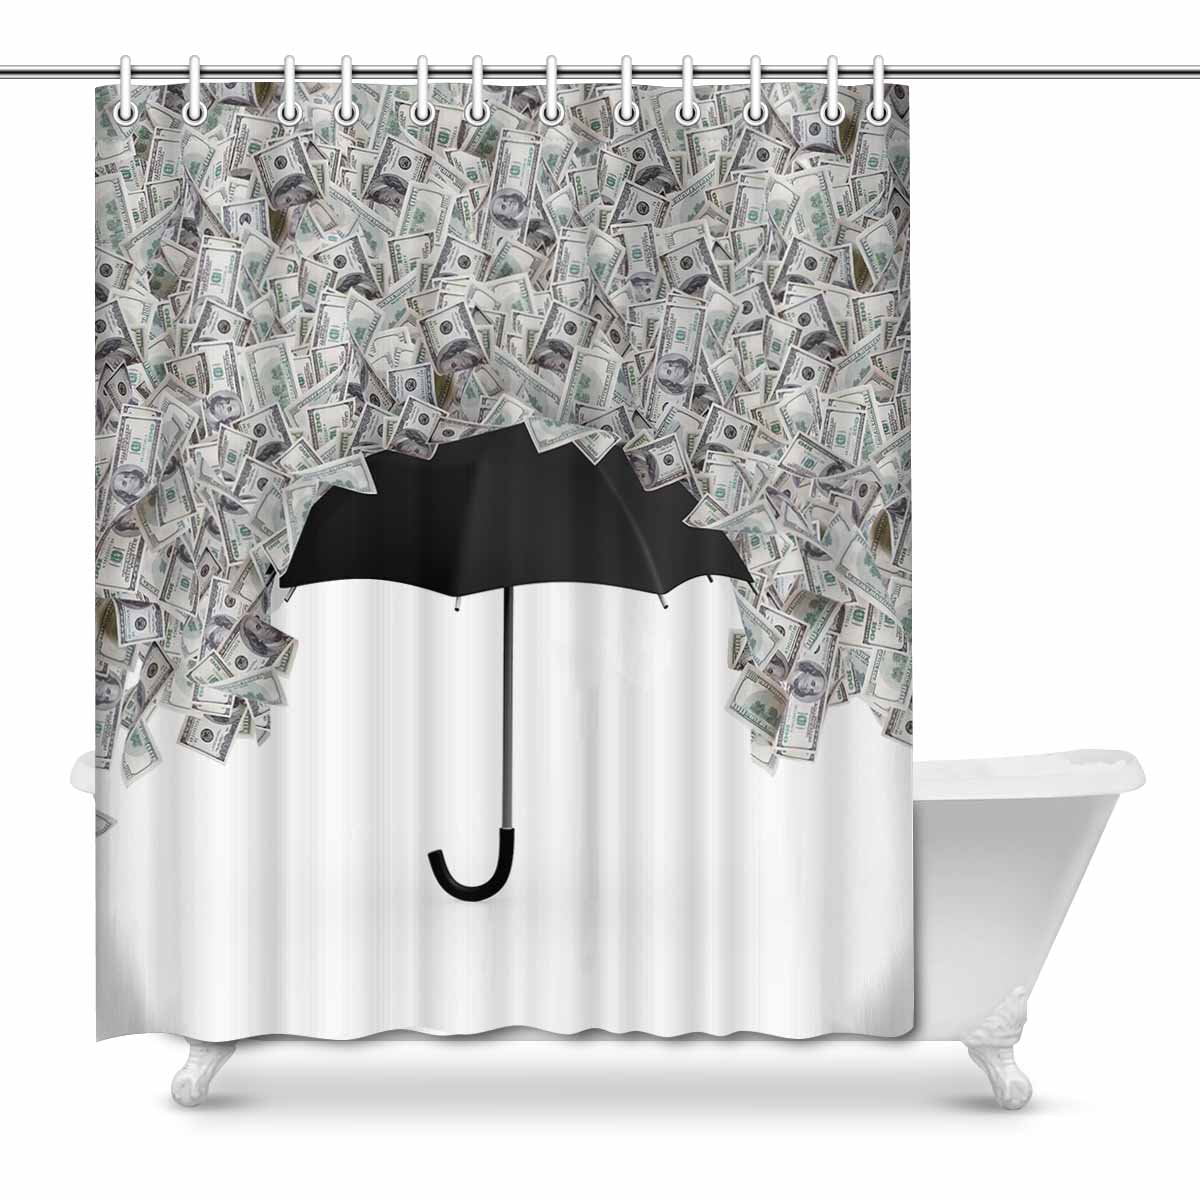 Franklin Dollars Waterproof Shower Curtain Complete Bathroom Set with Rings 